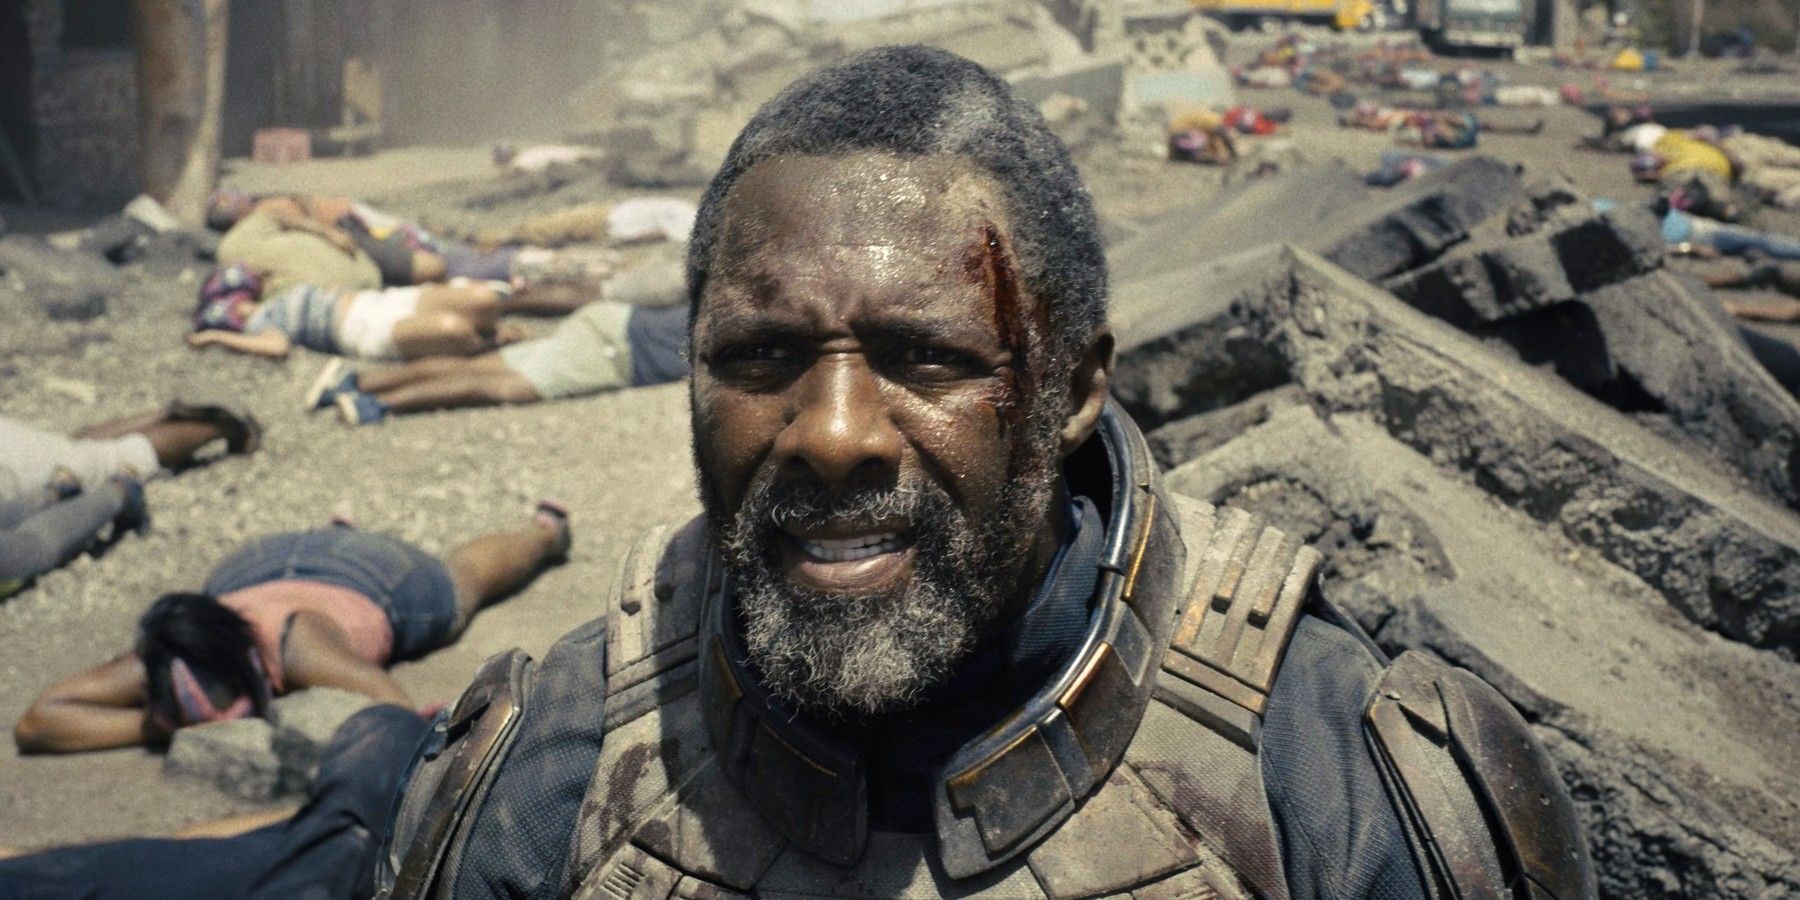 Idris Elba as Bloodsport in TSS